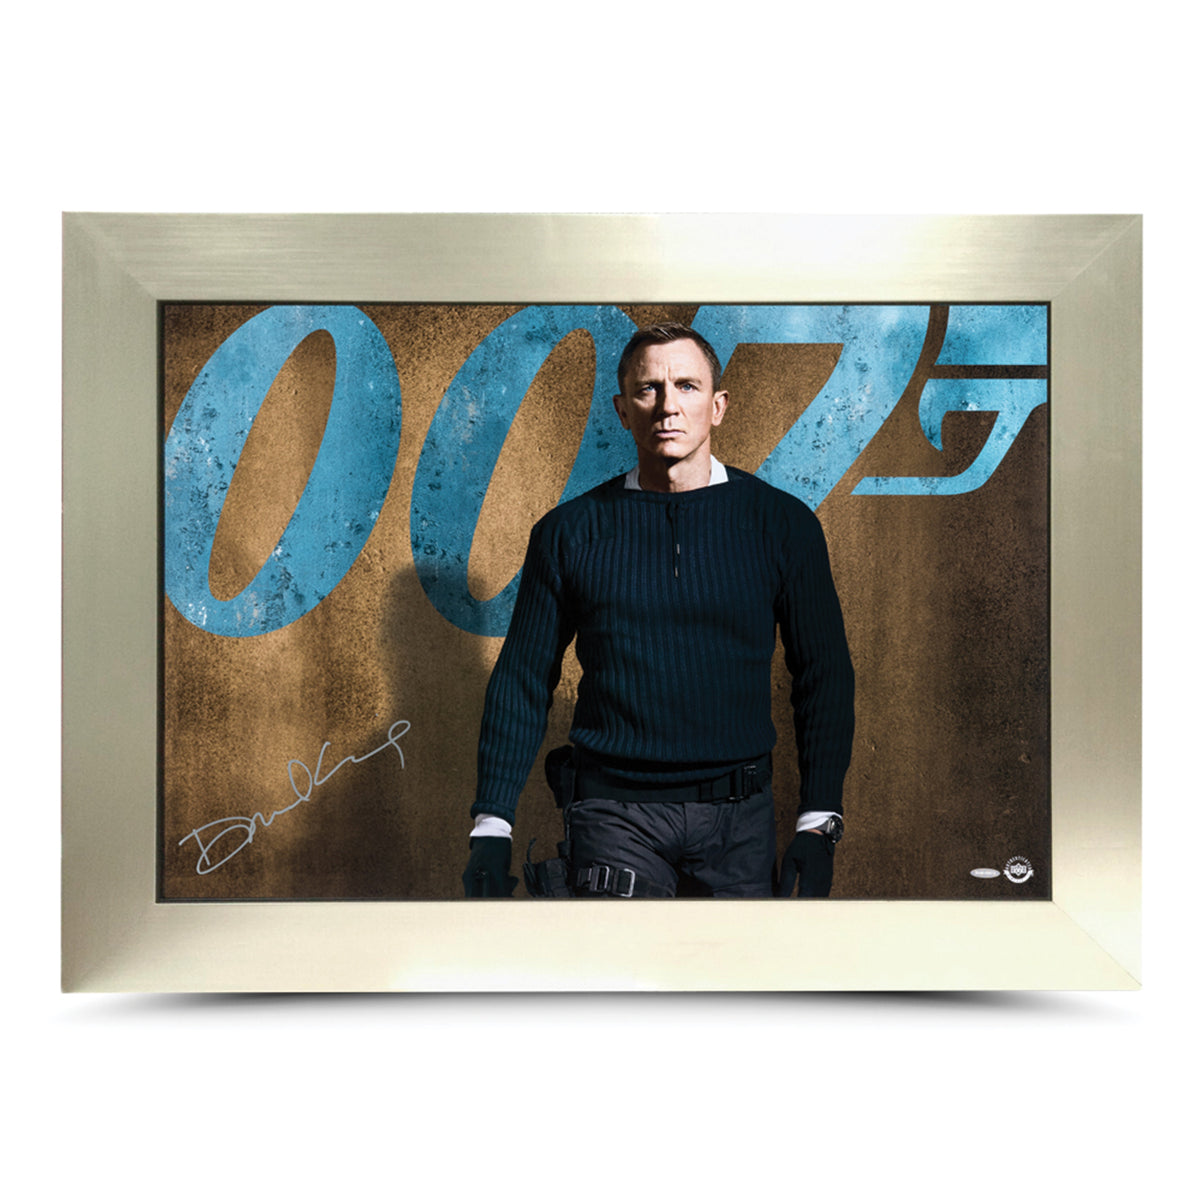 James Bond Daniel Craig Signed Autographed Photograph Framed - No Time To Die Edition